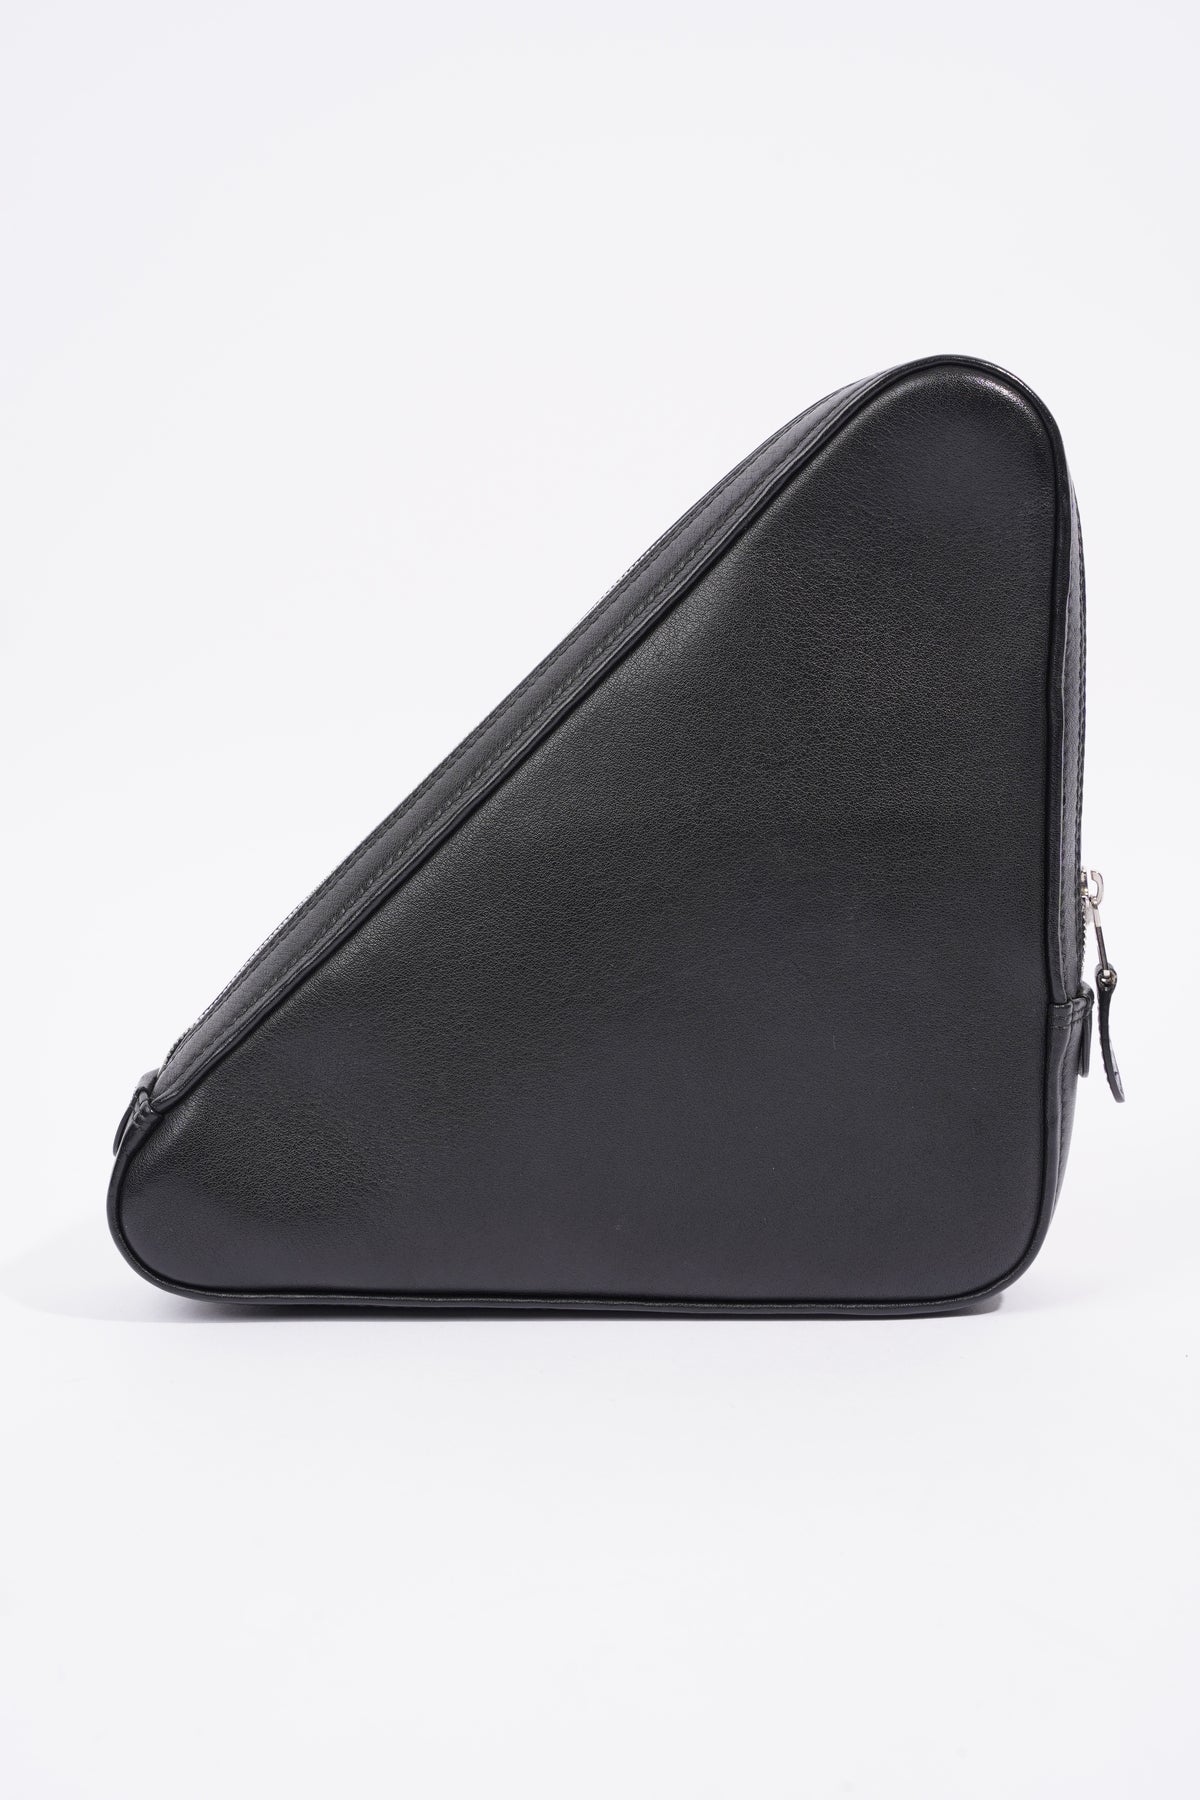 Balenciaga Silver Glitter Triangle Duffle XS Bag ○ Labellov ○ Buy and Sell  Authentic Luxury